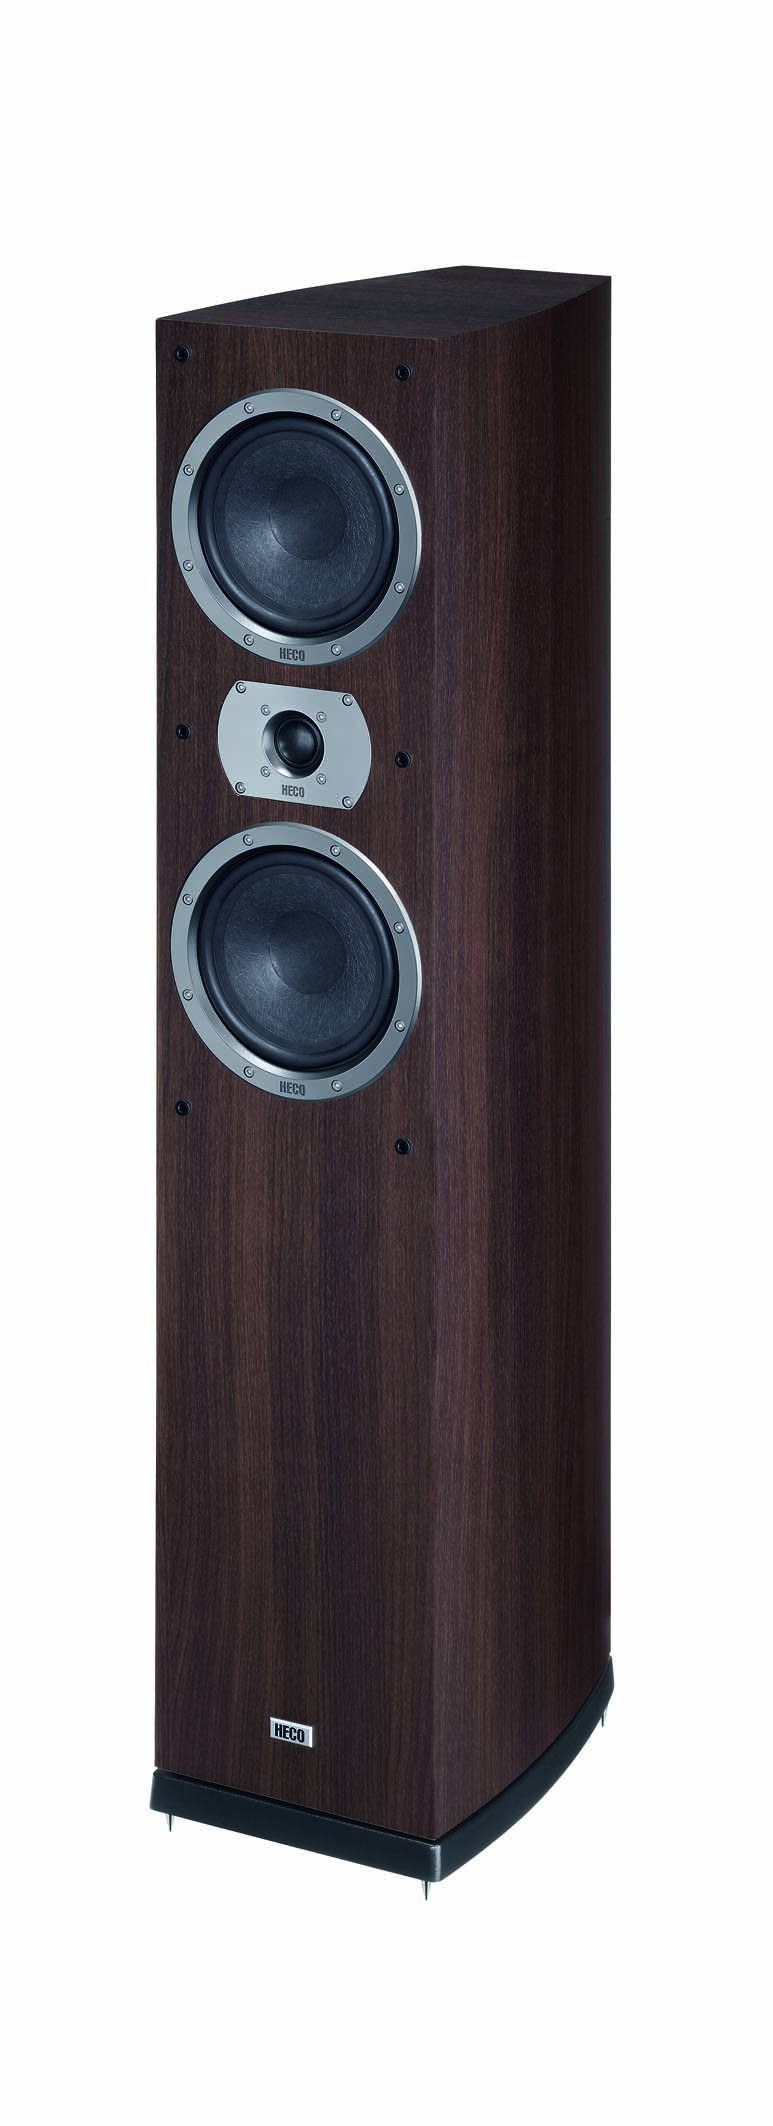 Victa Prime 502, 2 1/2-way floorstanding speaker, bass reflex configuration